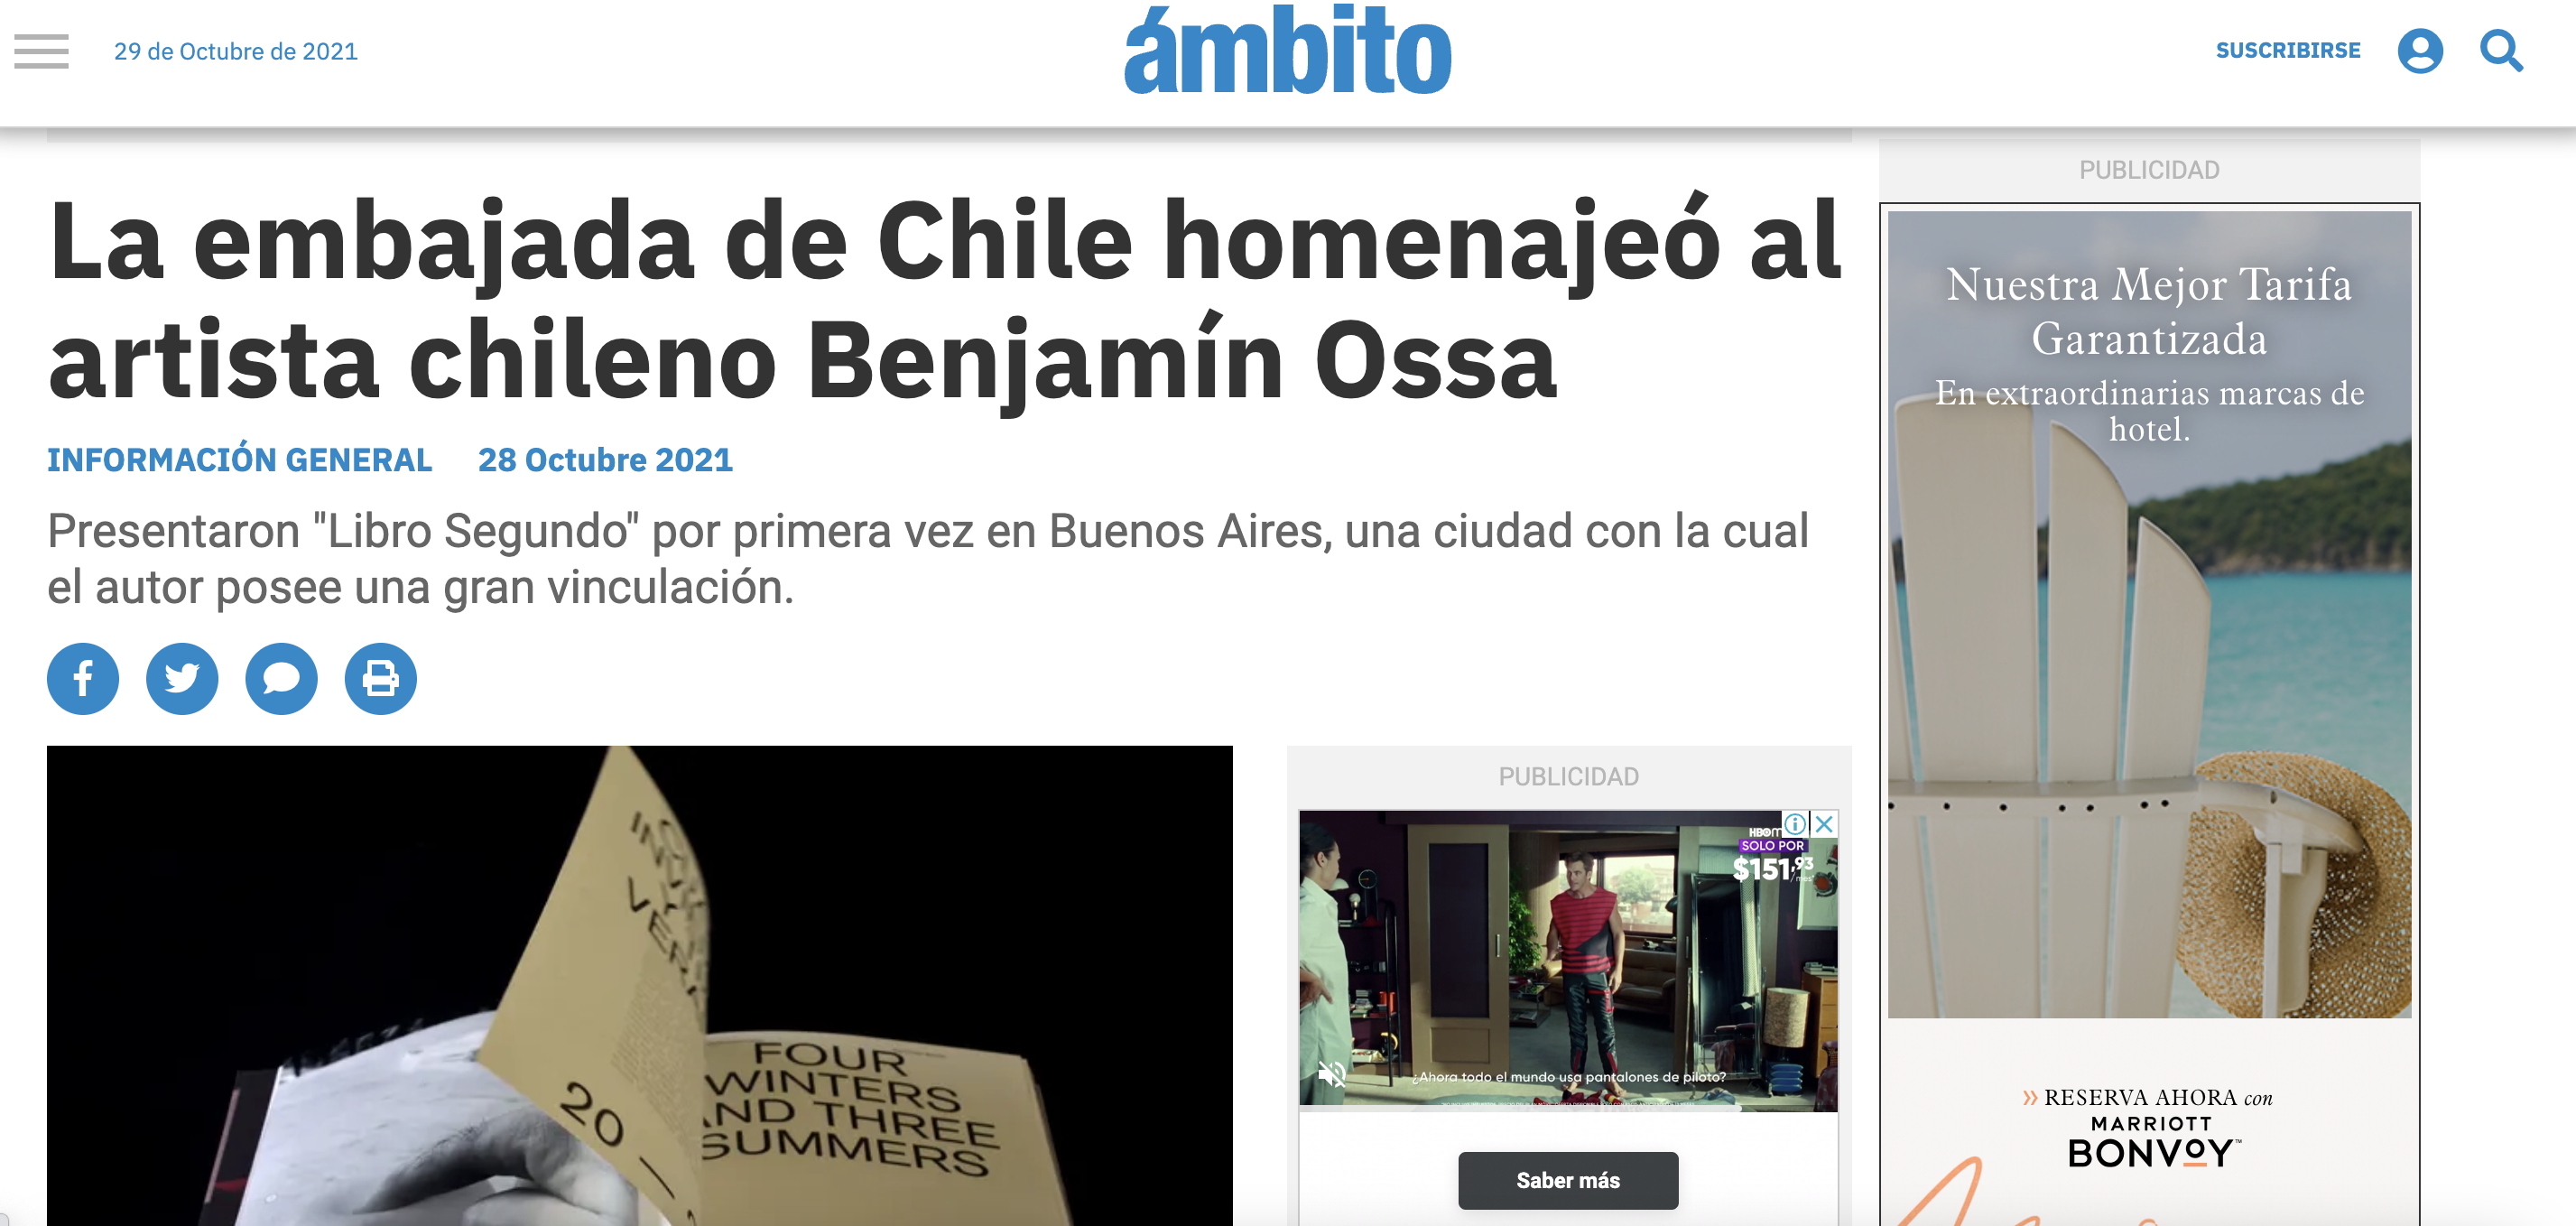 La embajada de Chile homenajeó al artista chileno Benjamín Ossa